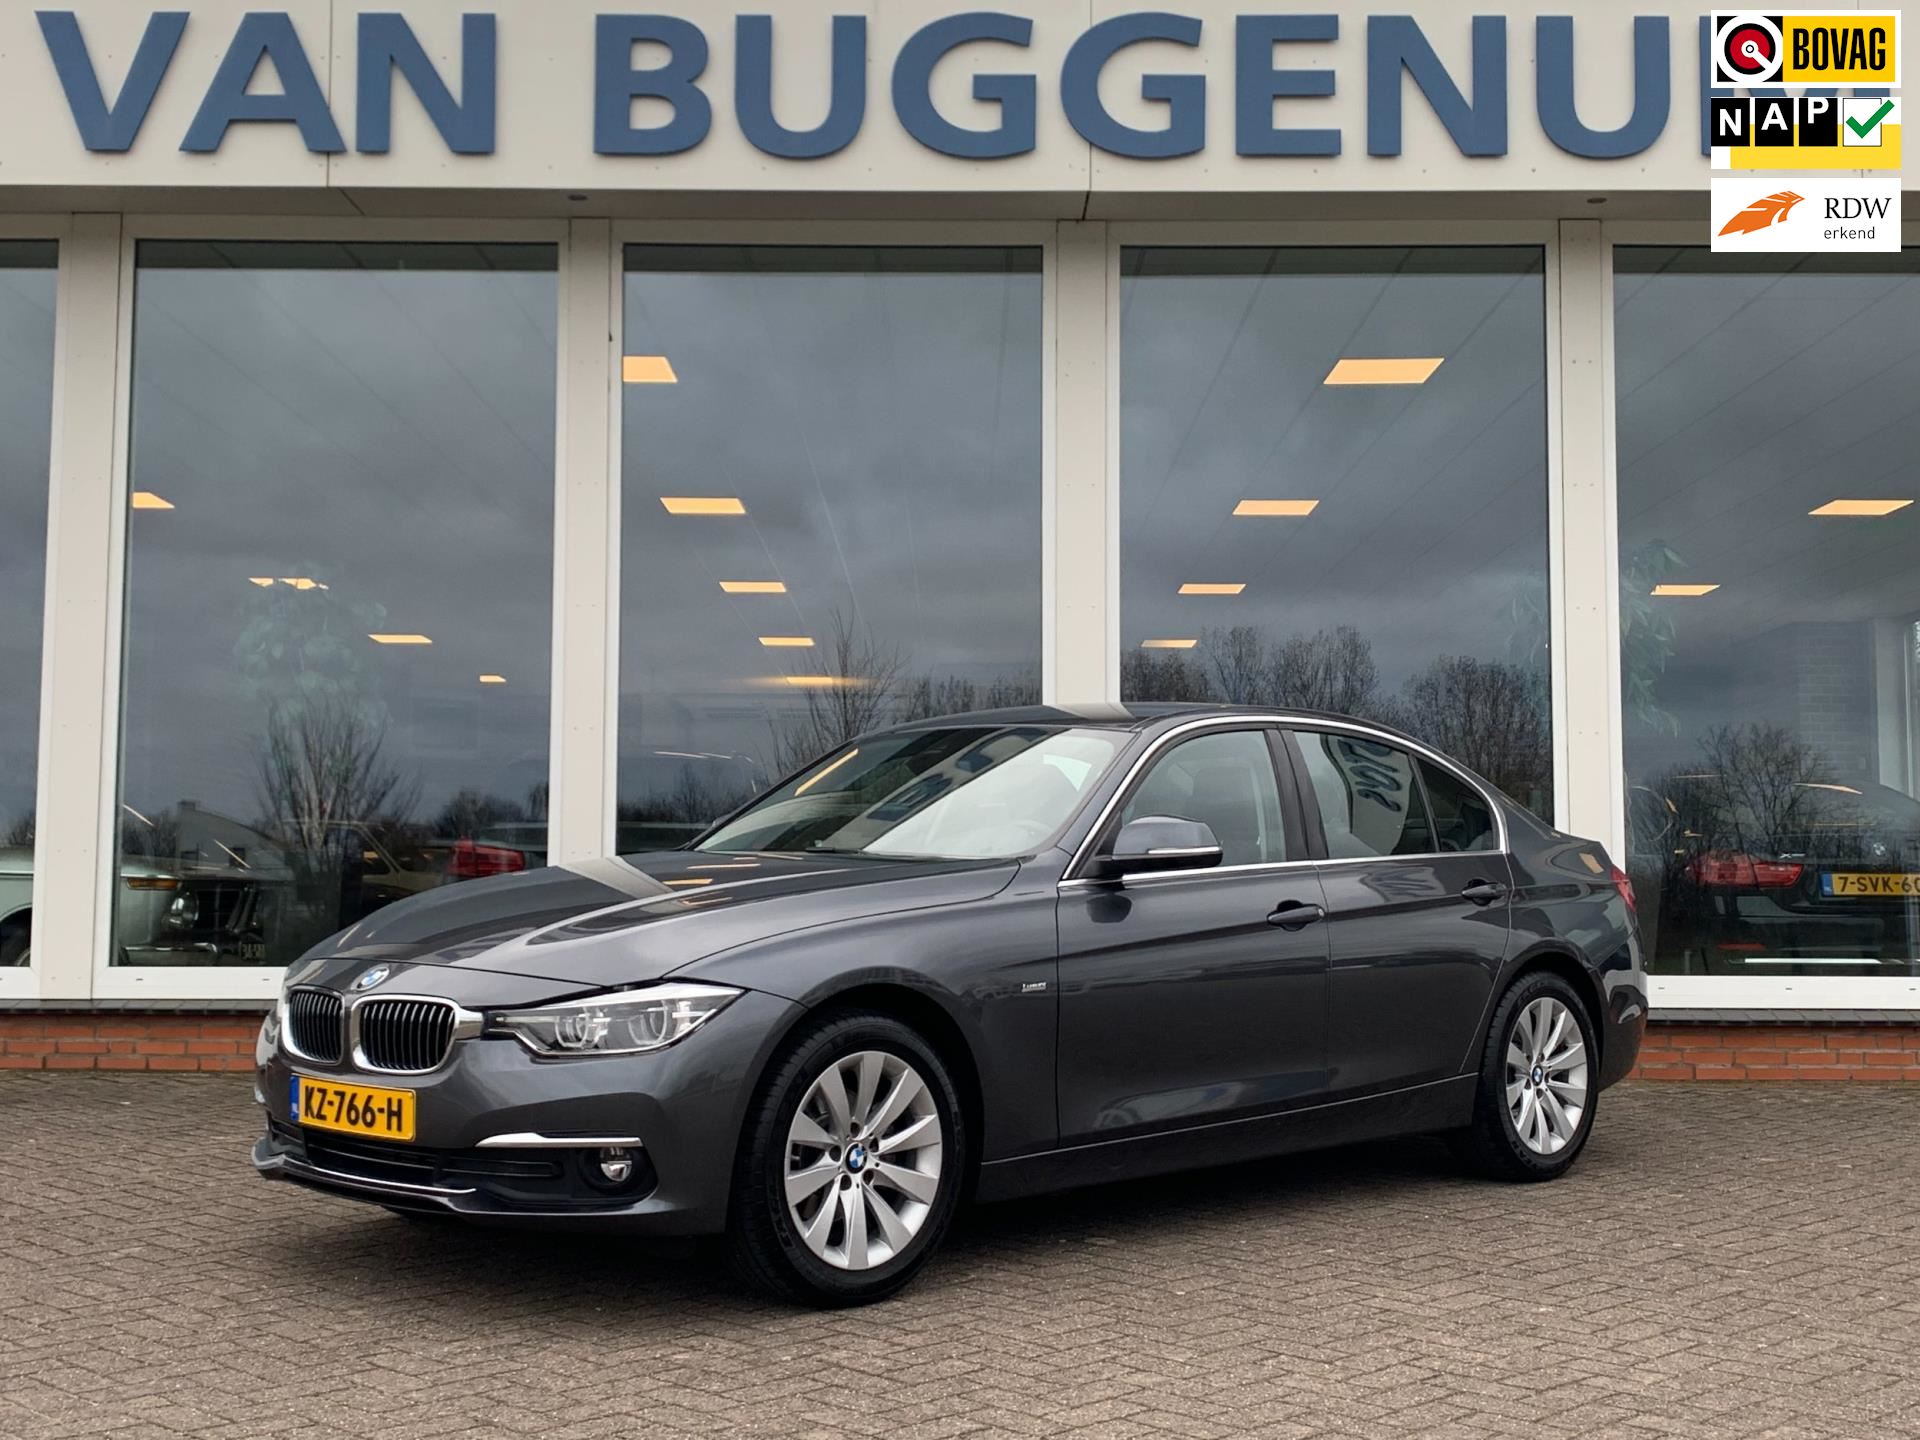 BMW 3-serie occasion - Automobielbedrijf J. van Buggenum